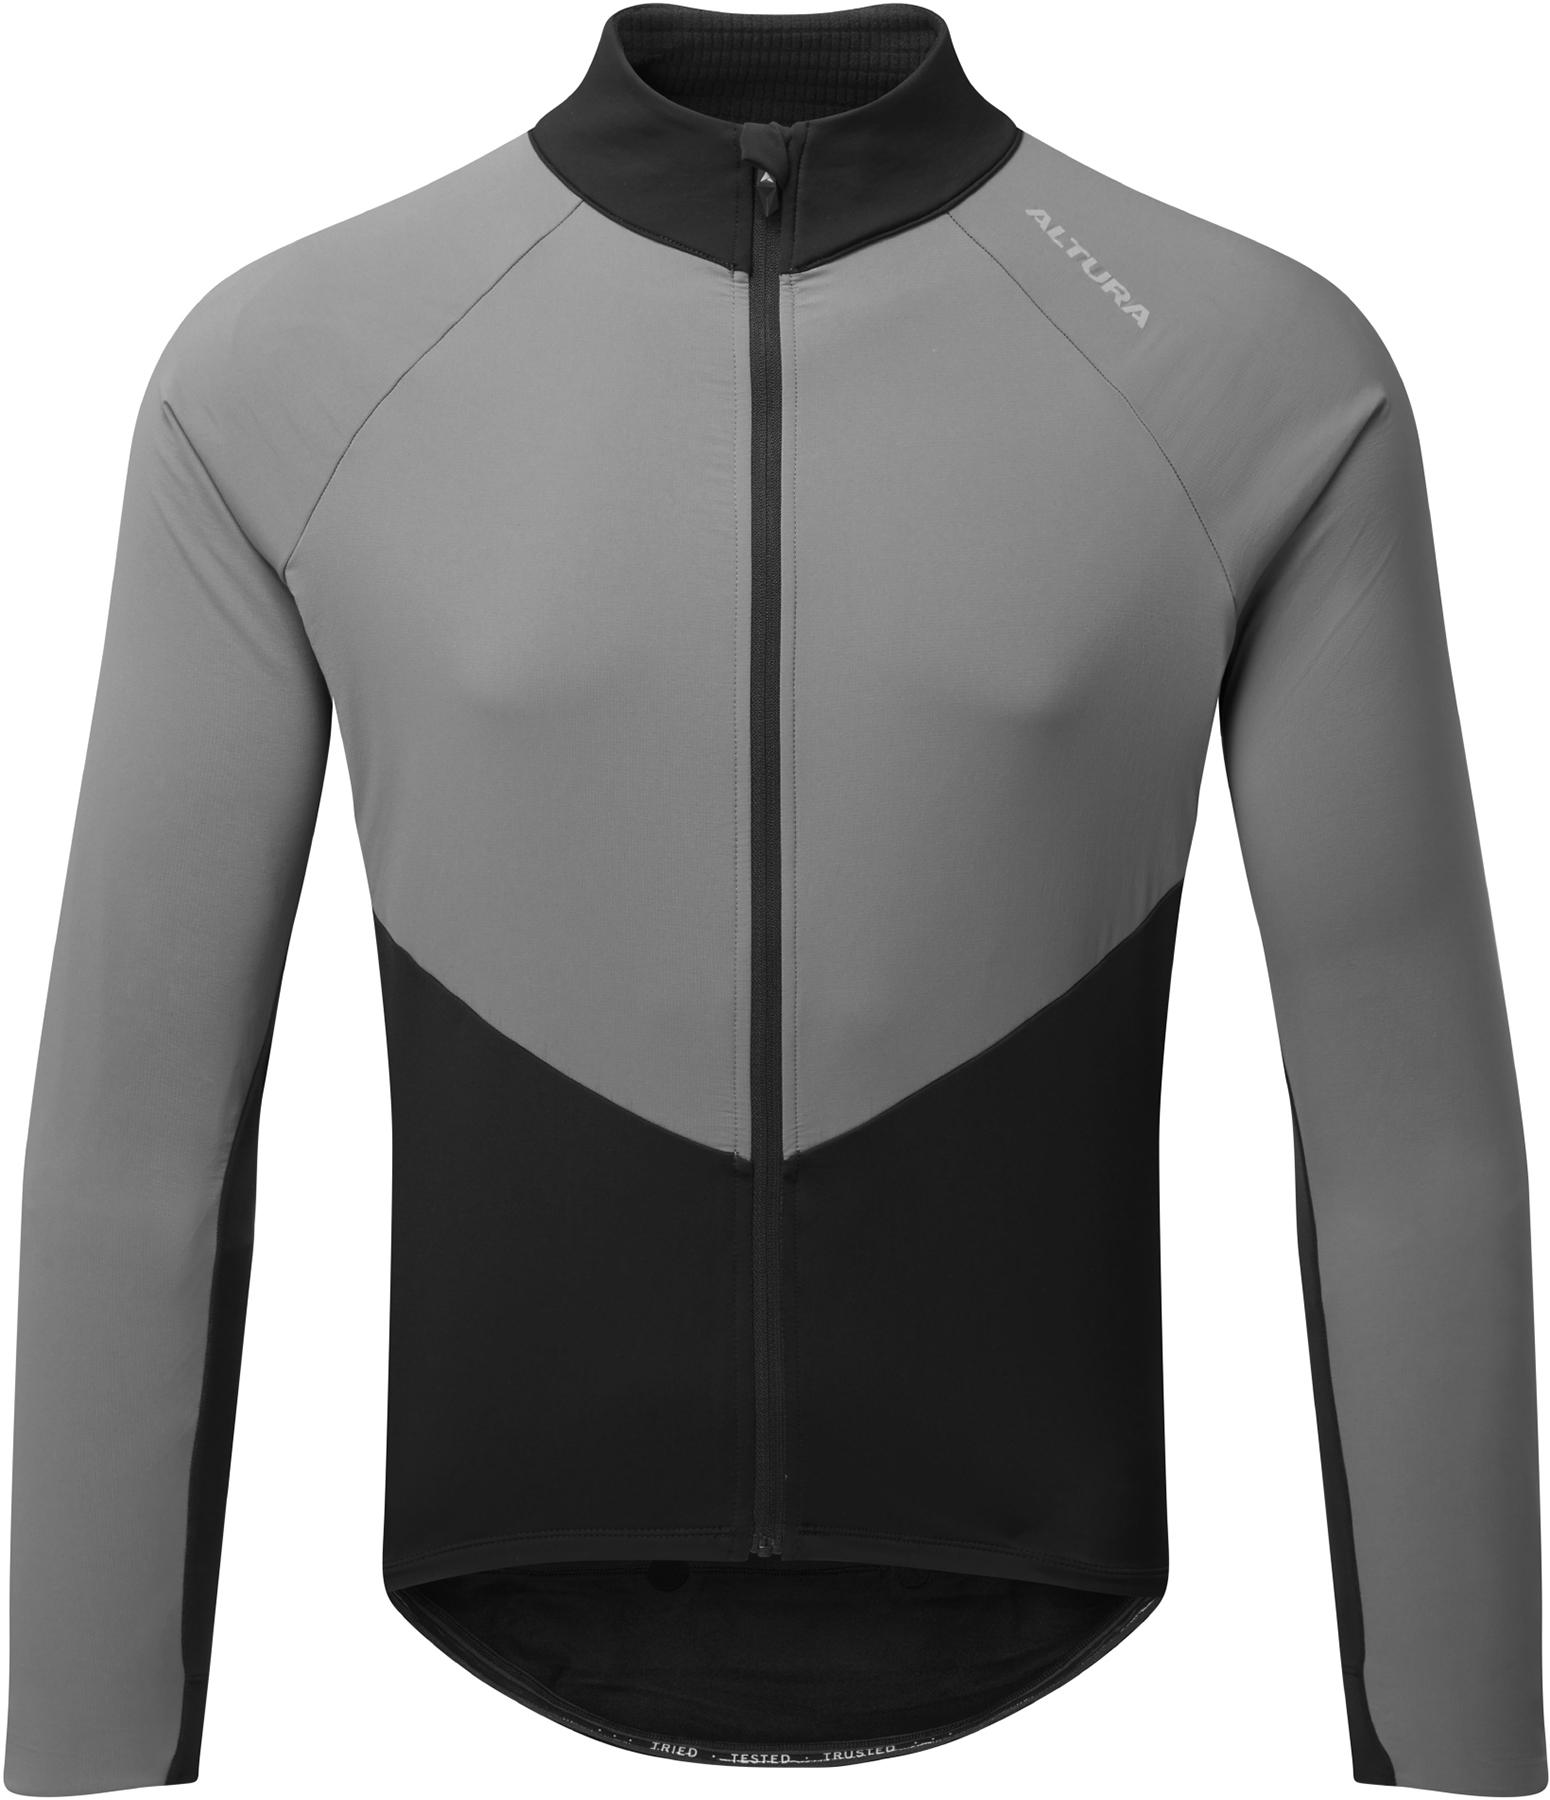 Altura Endurance Long Sleeve Jersey - Black/grey